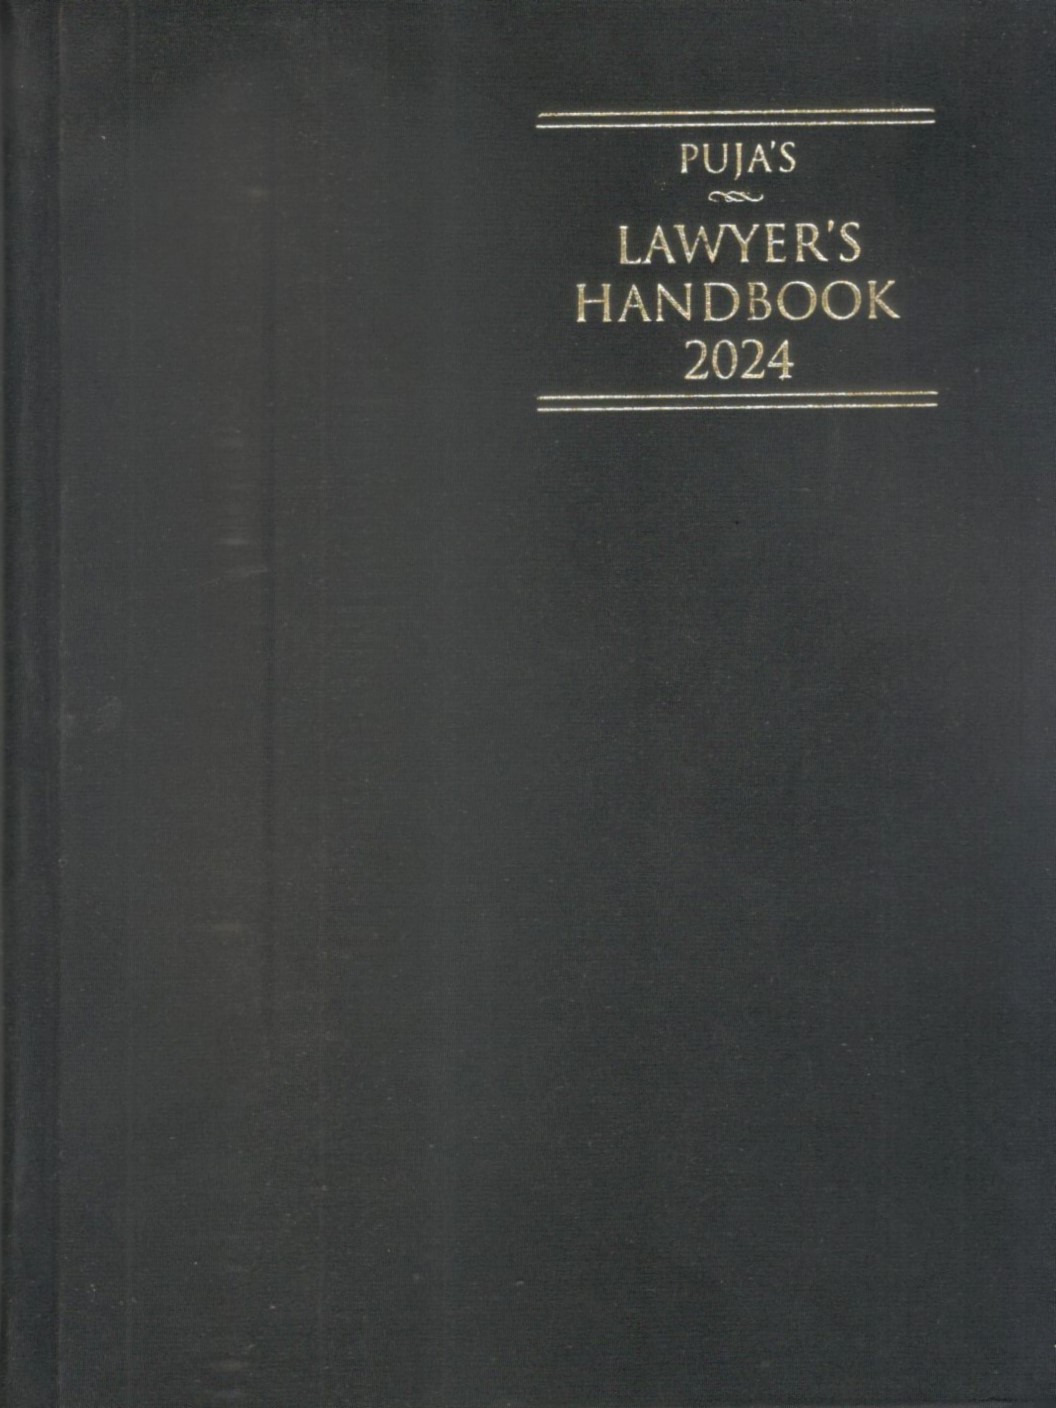  Buy Puja’s Lawyer’s Handbook 2024 - Black Small Size Regular Hardbound